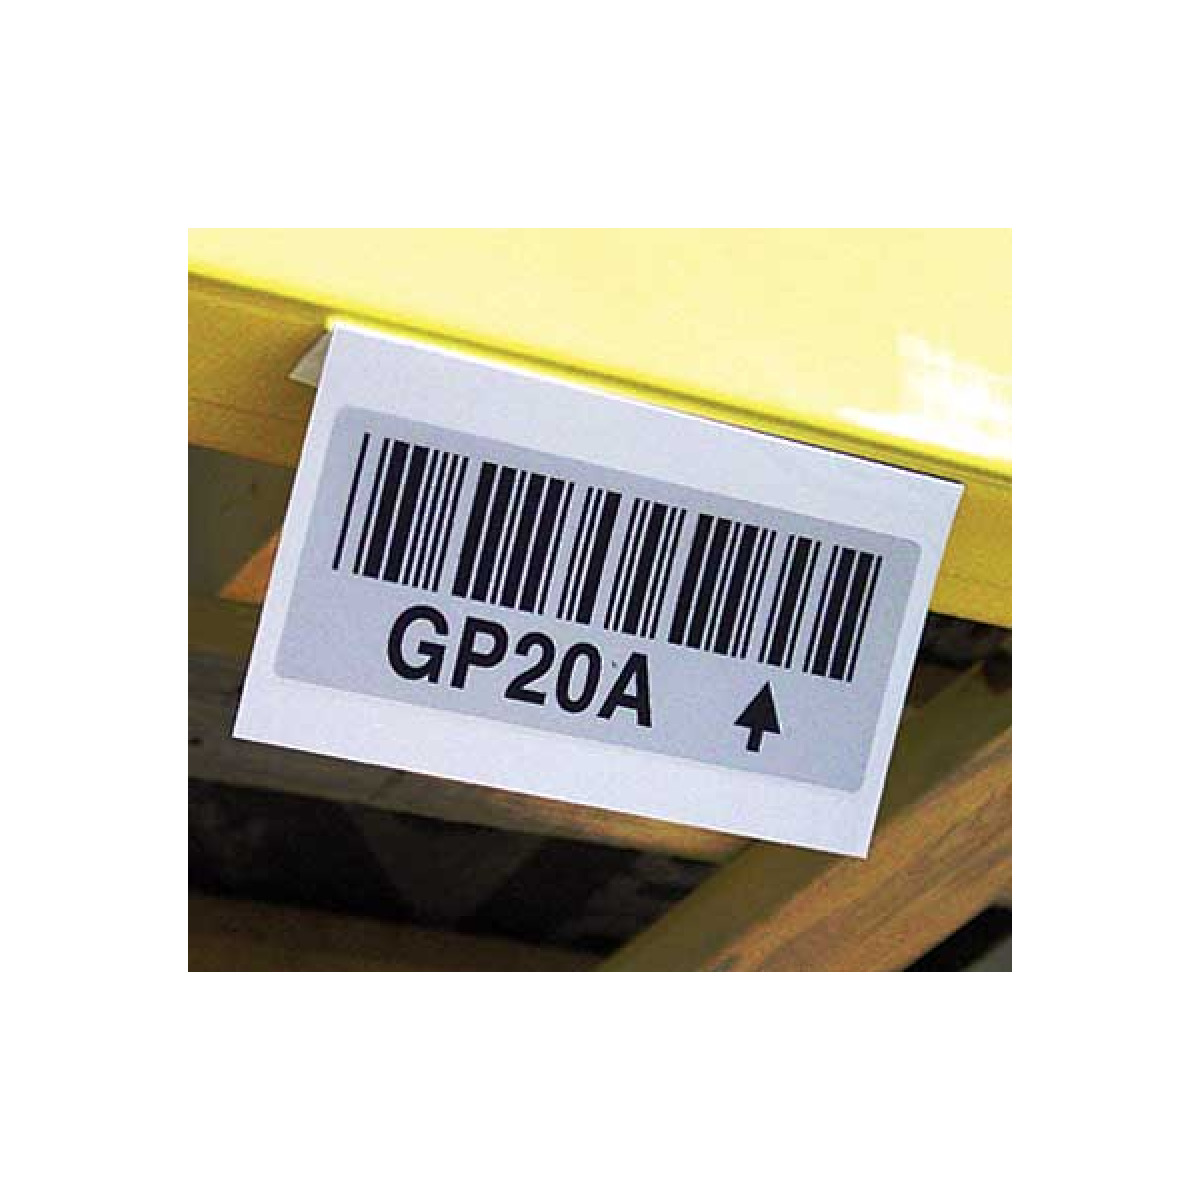 Reflective barcode labels for long range scanning of high rack levels